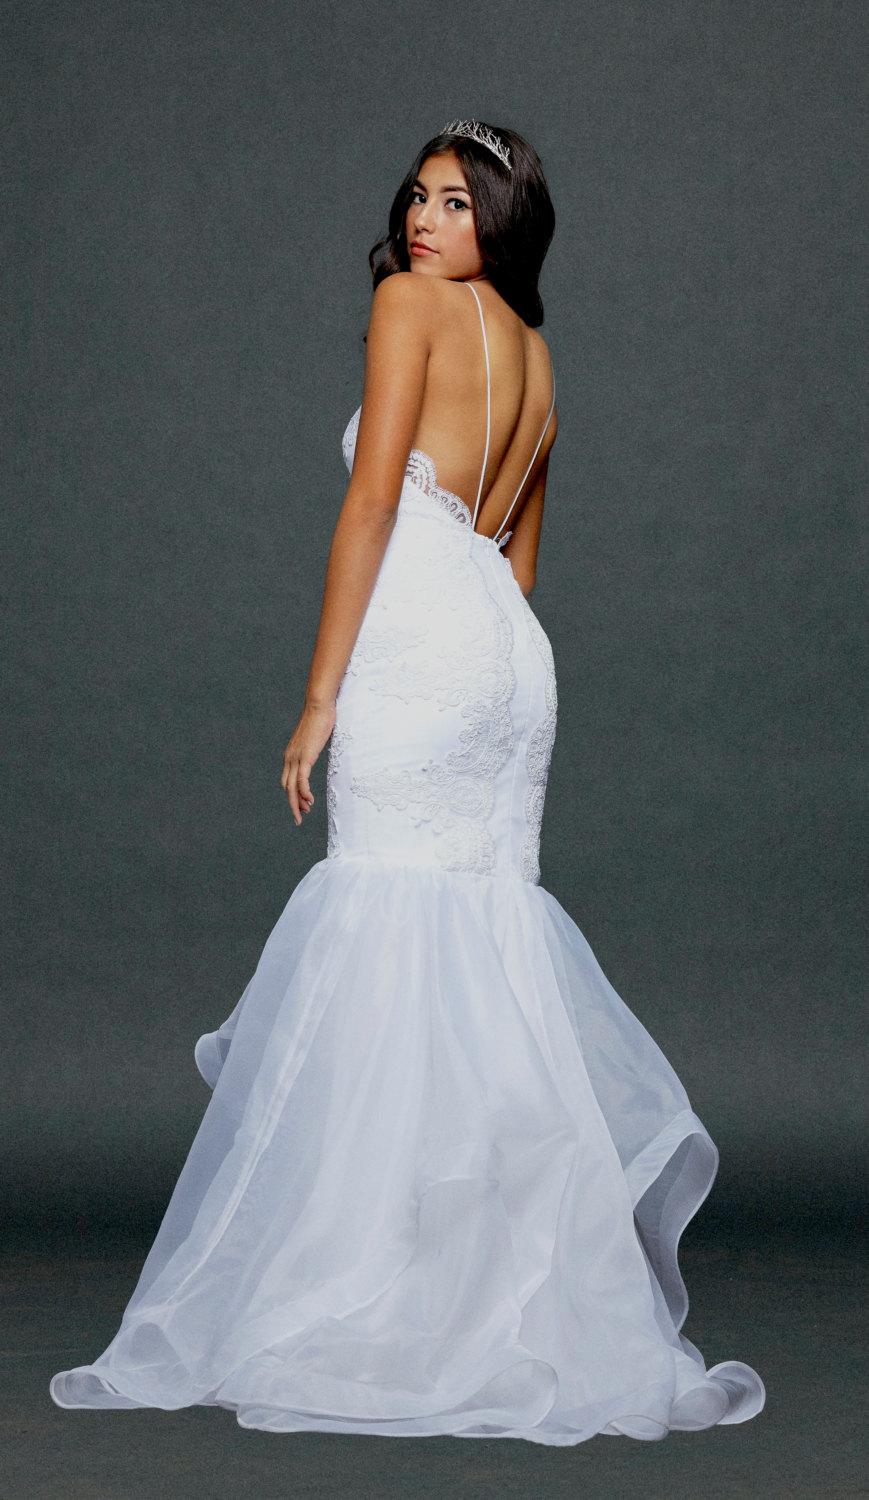 زفاف - Low Back Trumpet Shape Wedding Dress. Lace and Chiffon Wedding Gown.